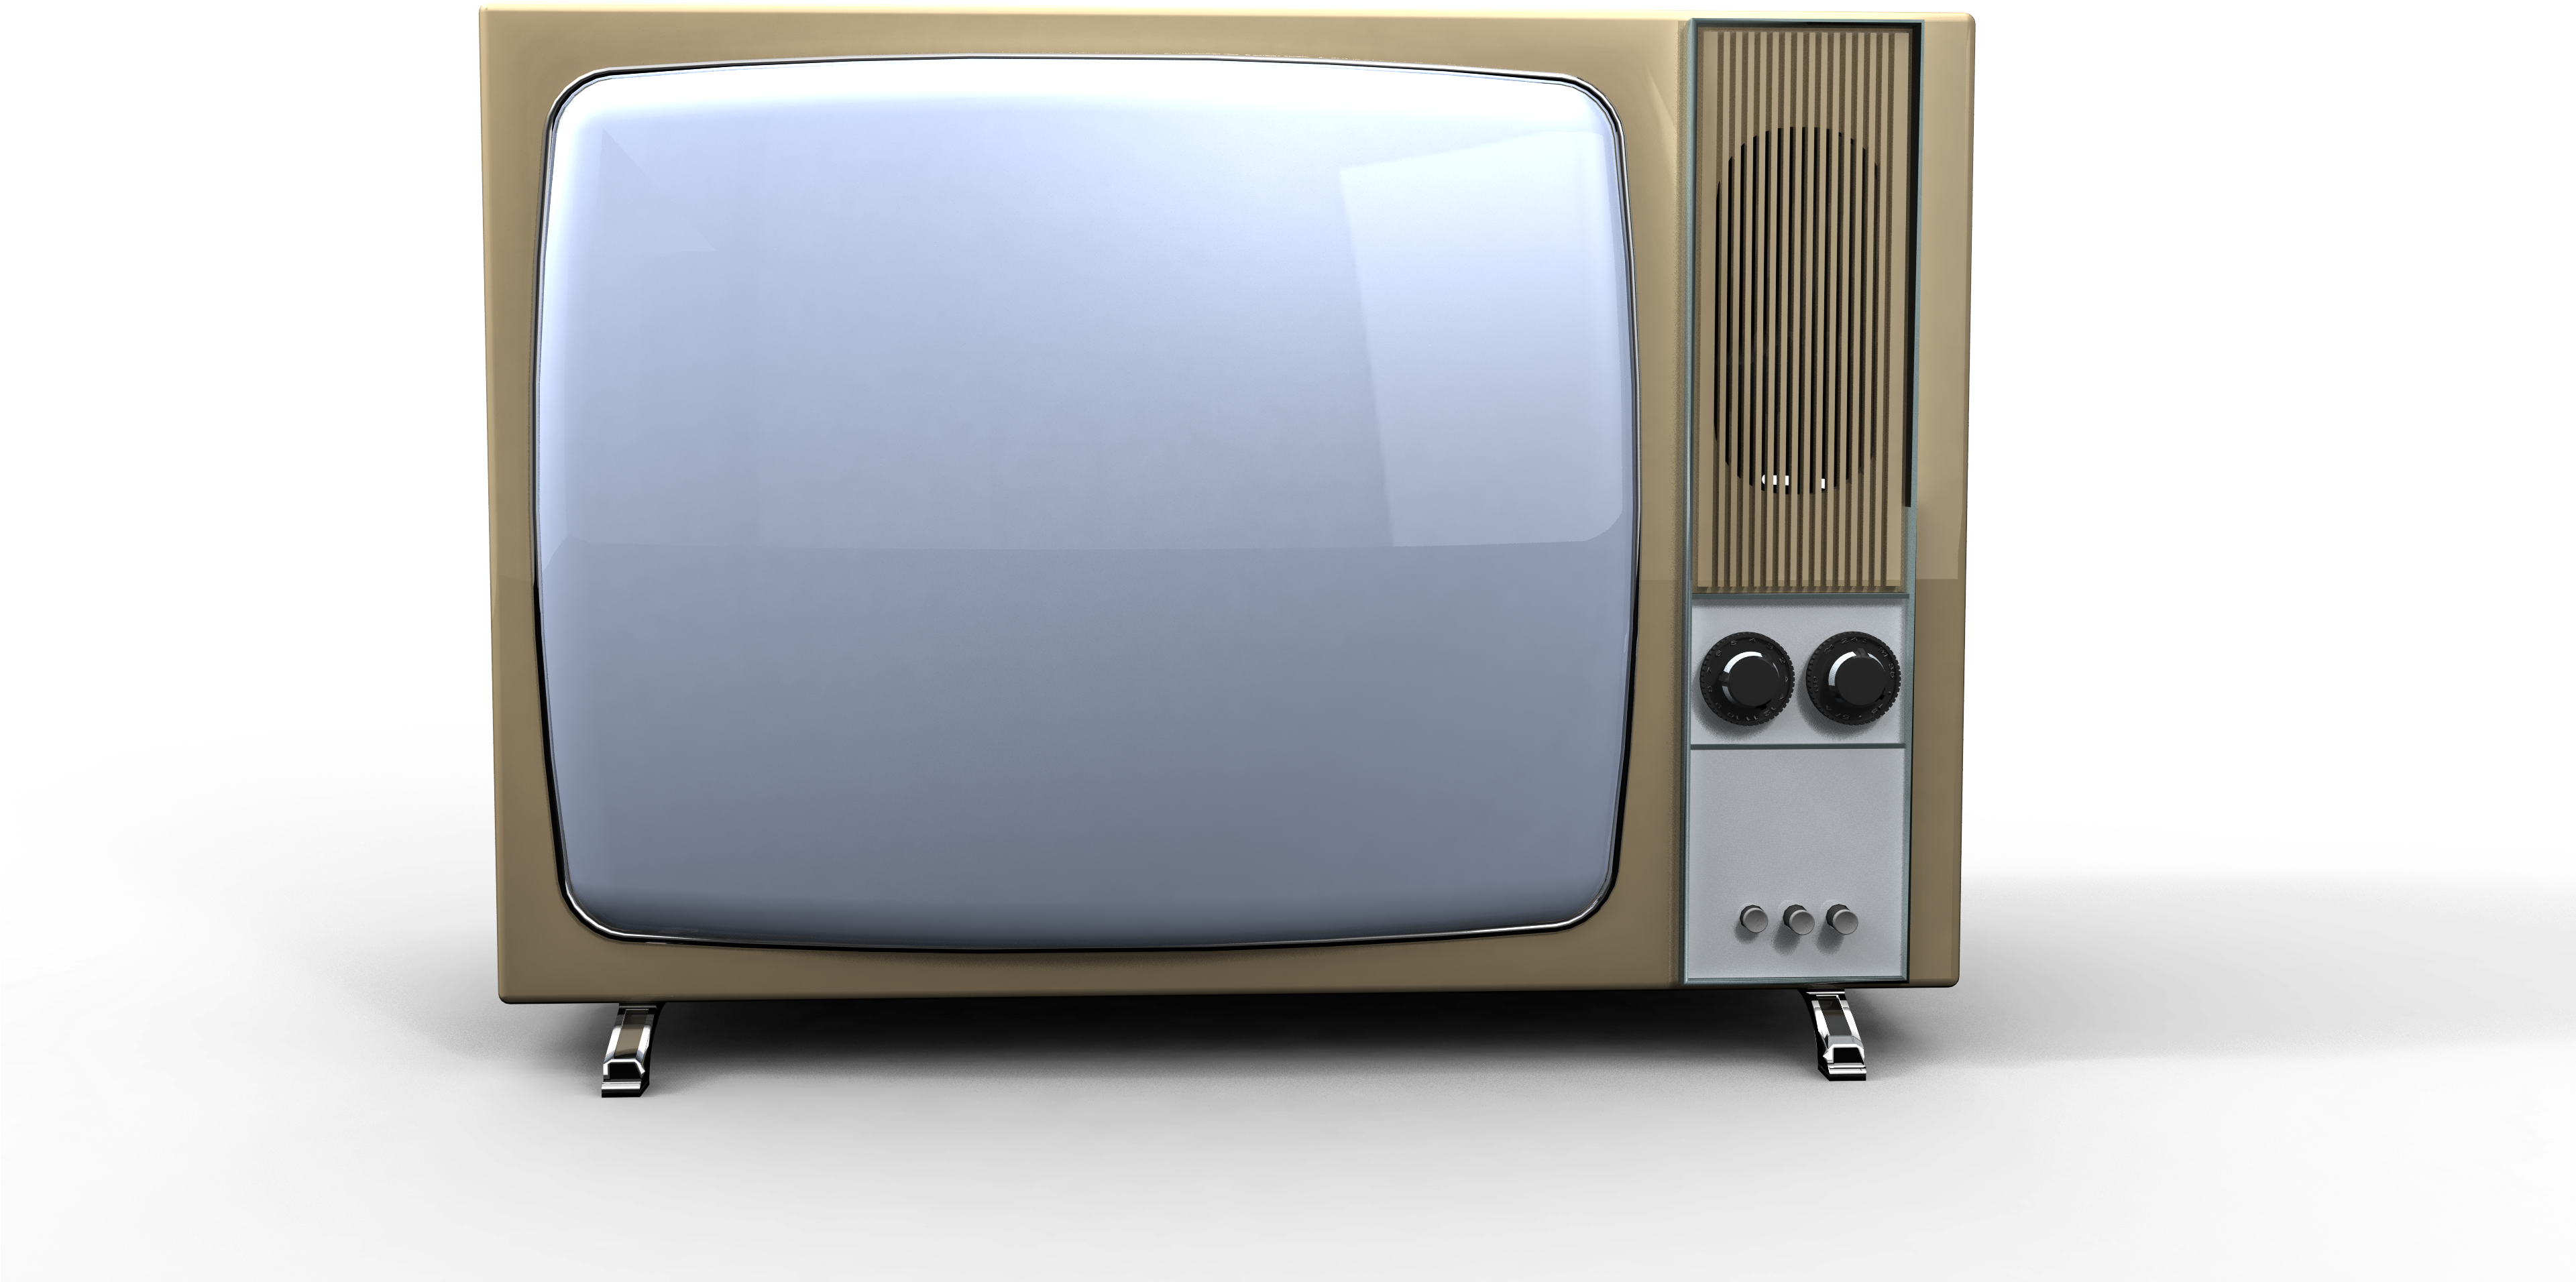 Старый телевизор. Старинный телевизор. Ретро телевизор сбоку. Старый телевизор на белом фоне.